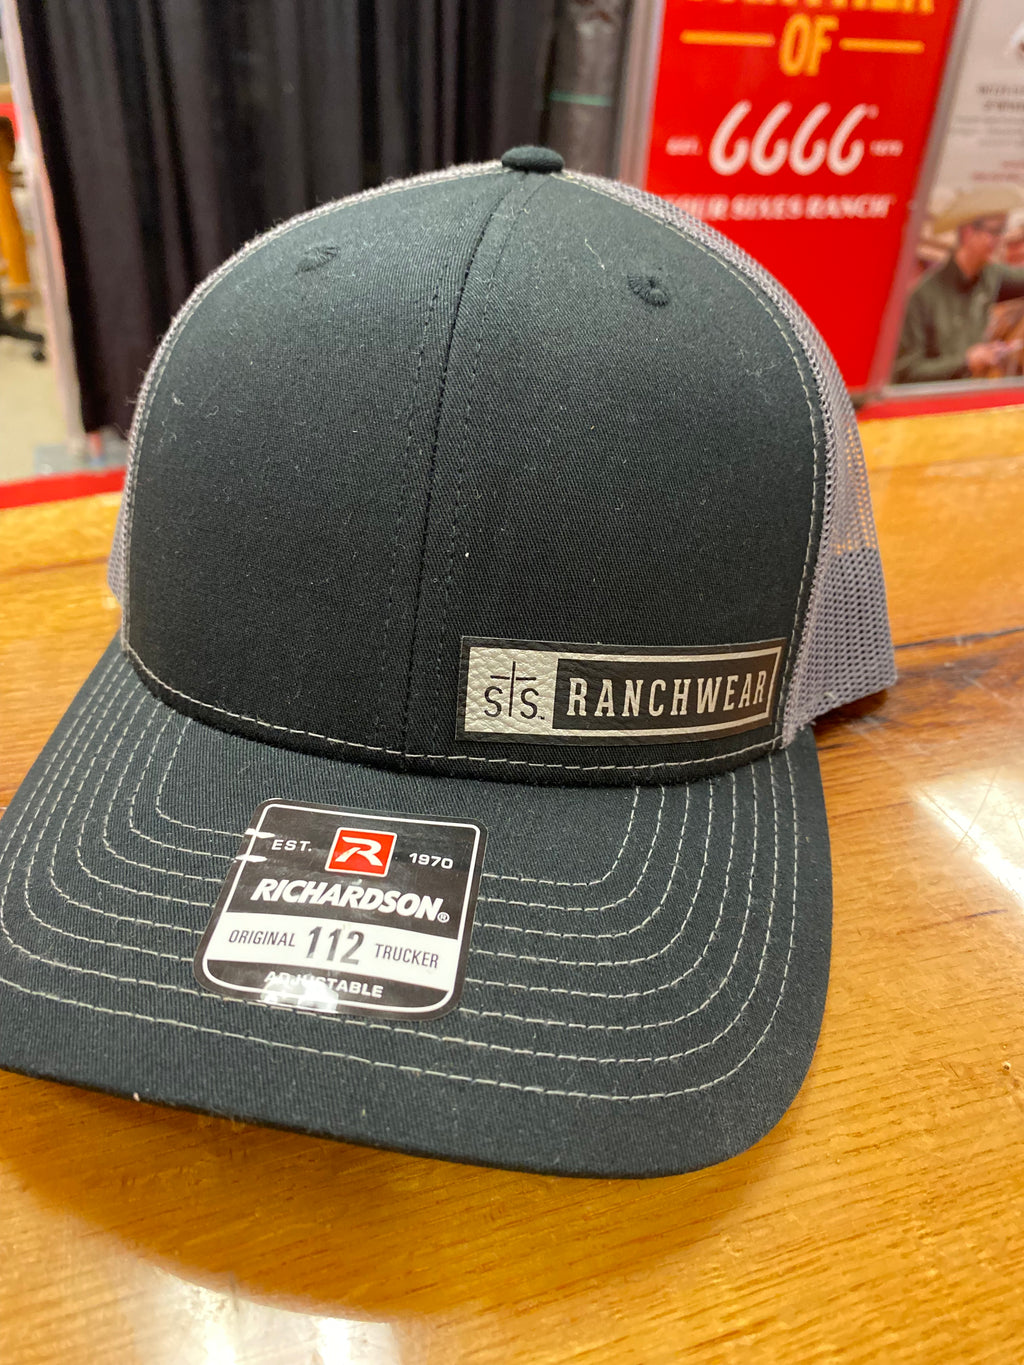 sTs Ranchwear Black & Gray Snap Back Cap